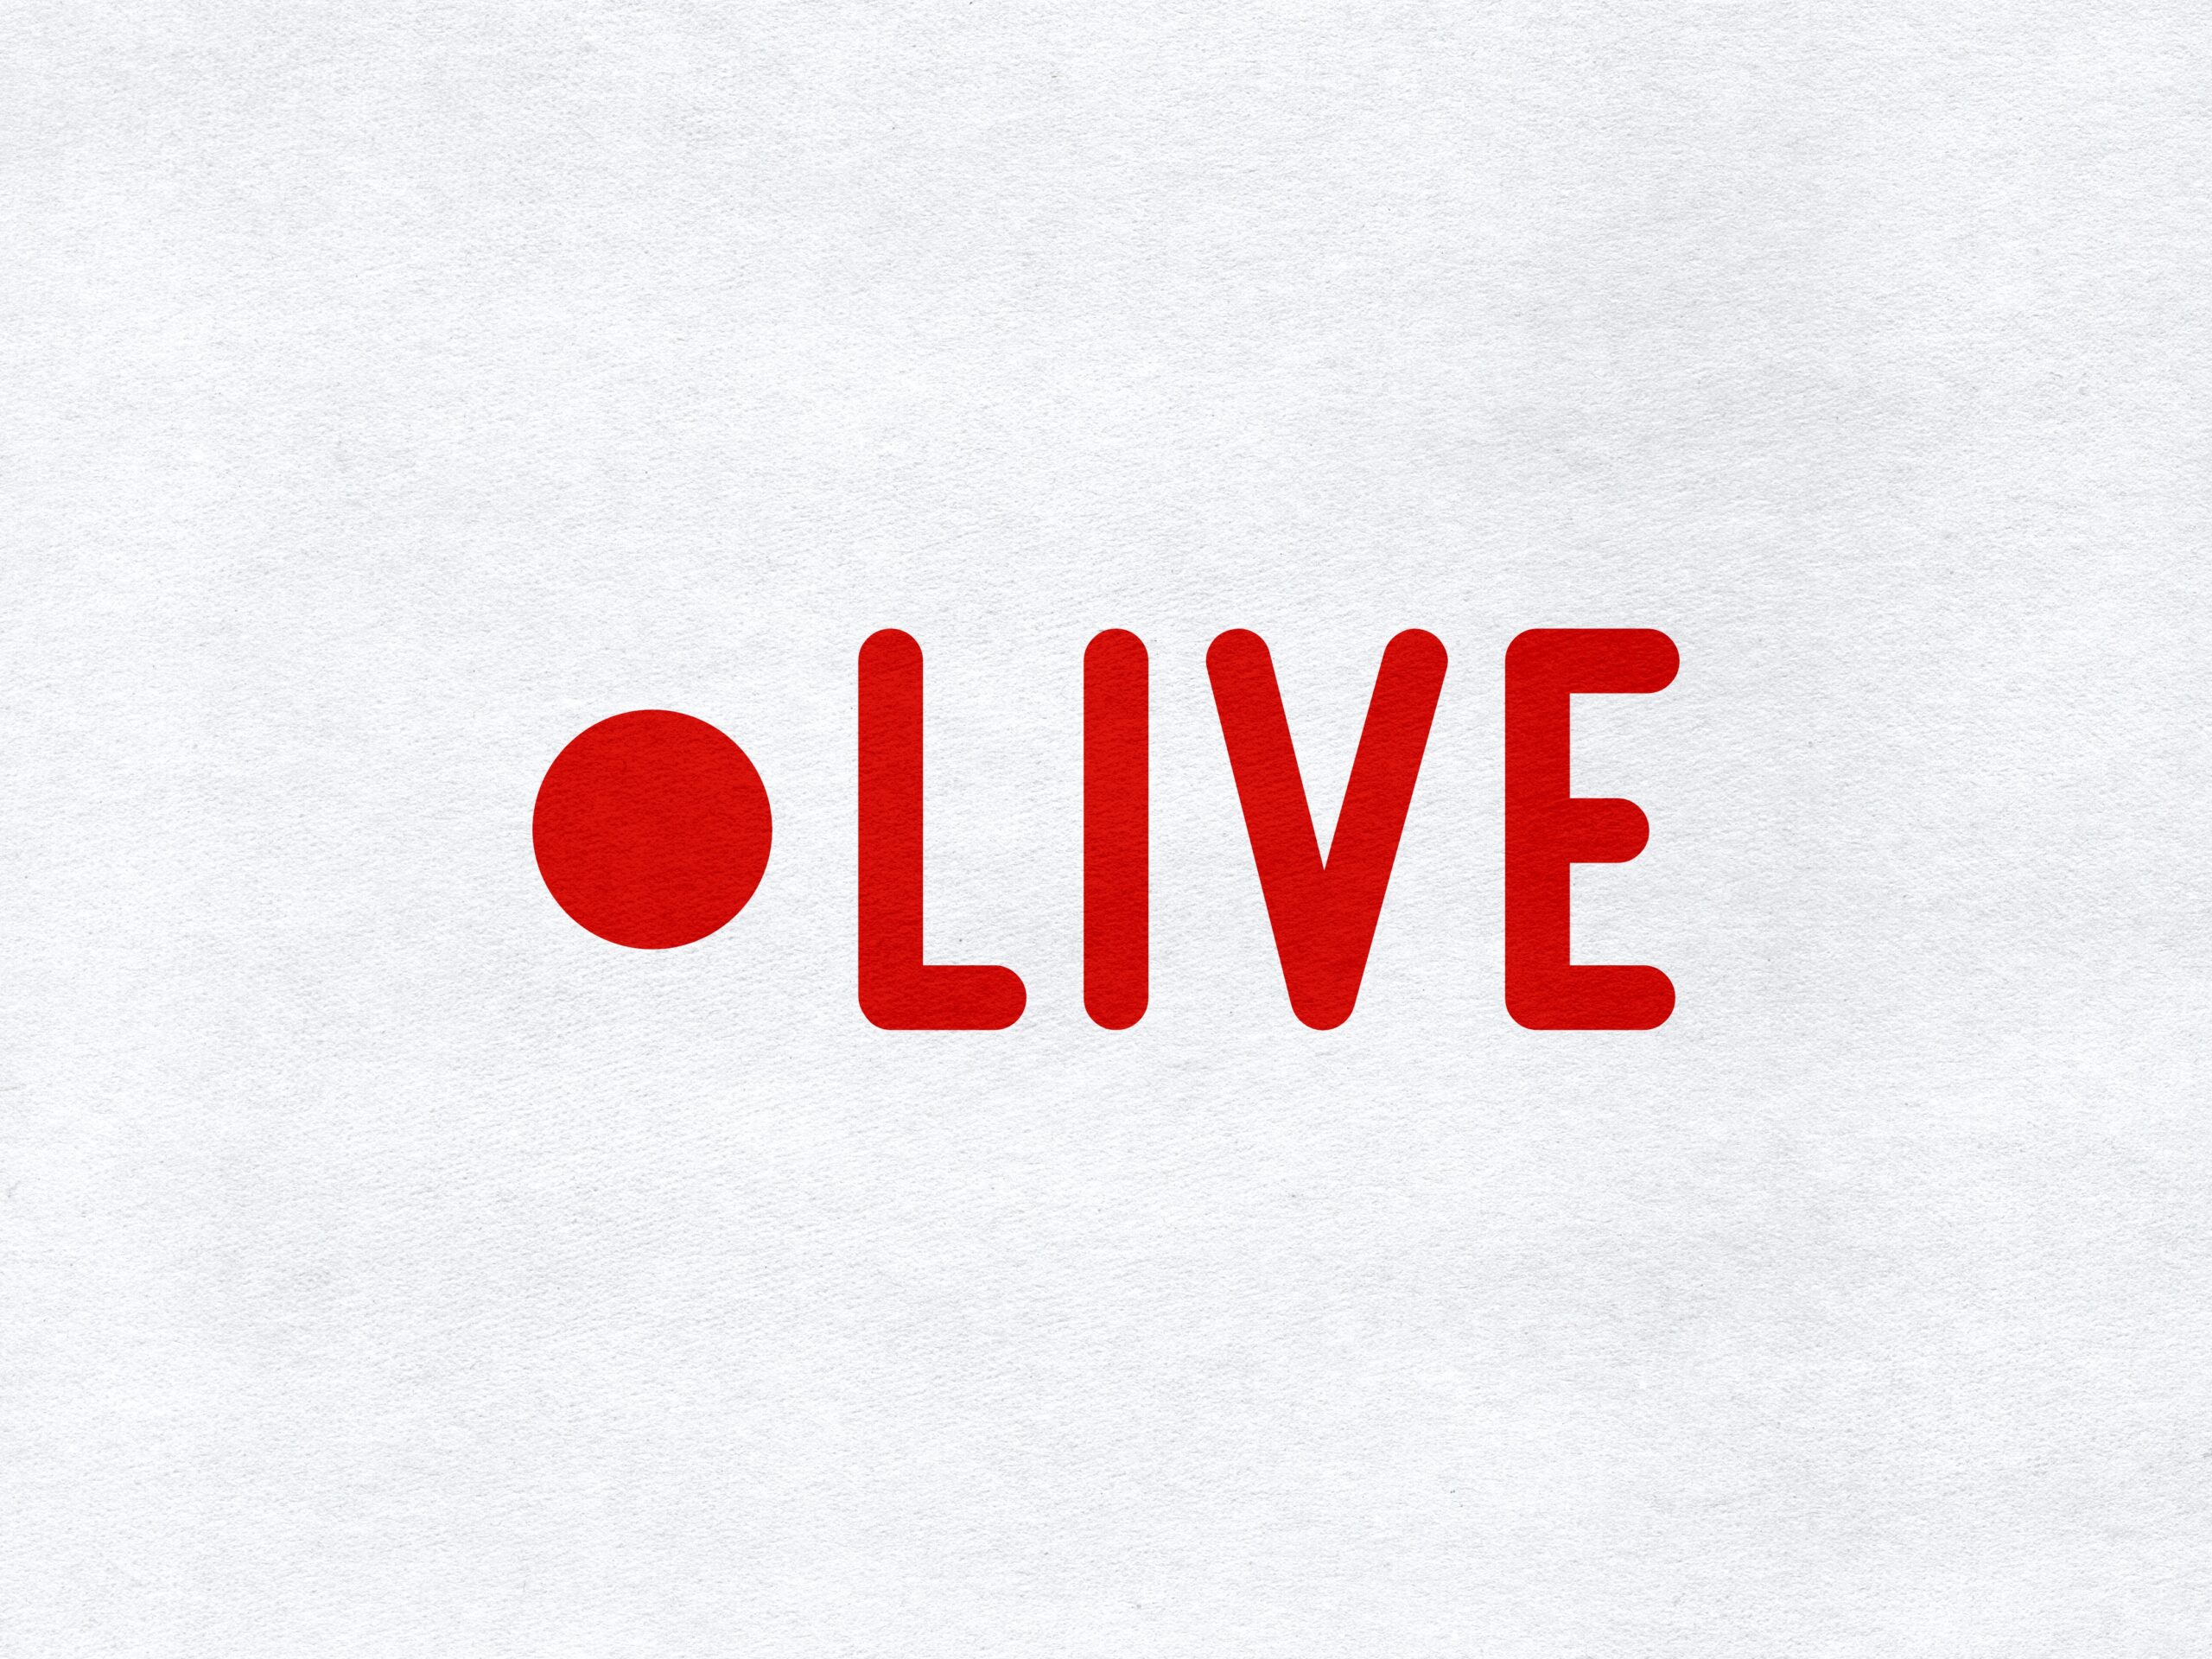 live stream icon on paper background 2022 10 26 06 05 53 utc scaled